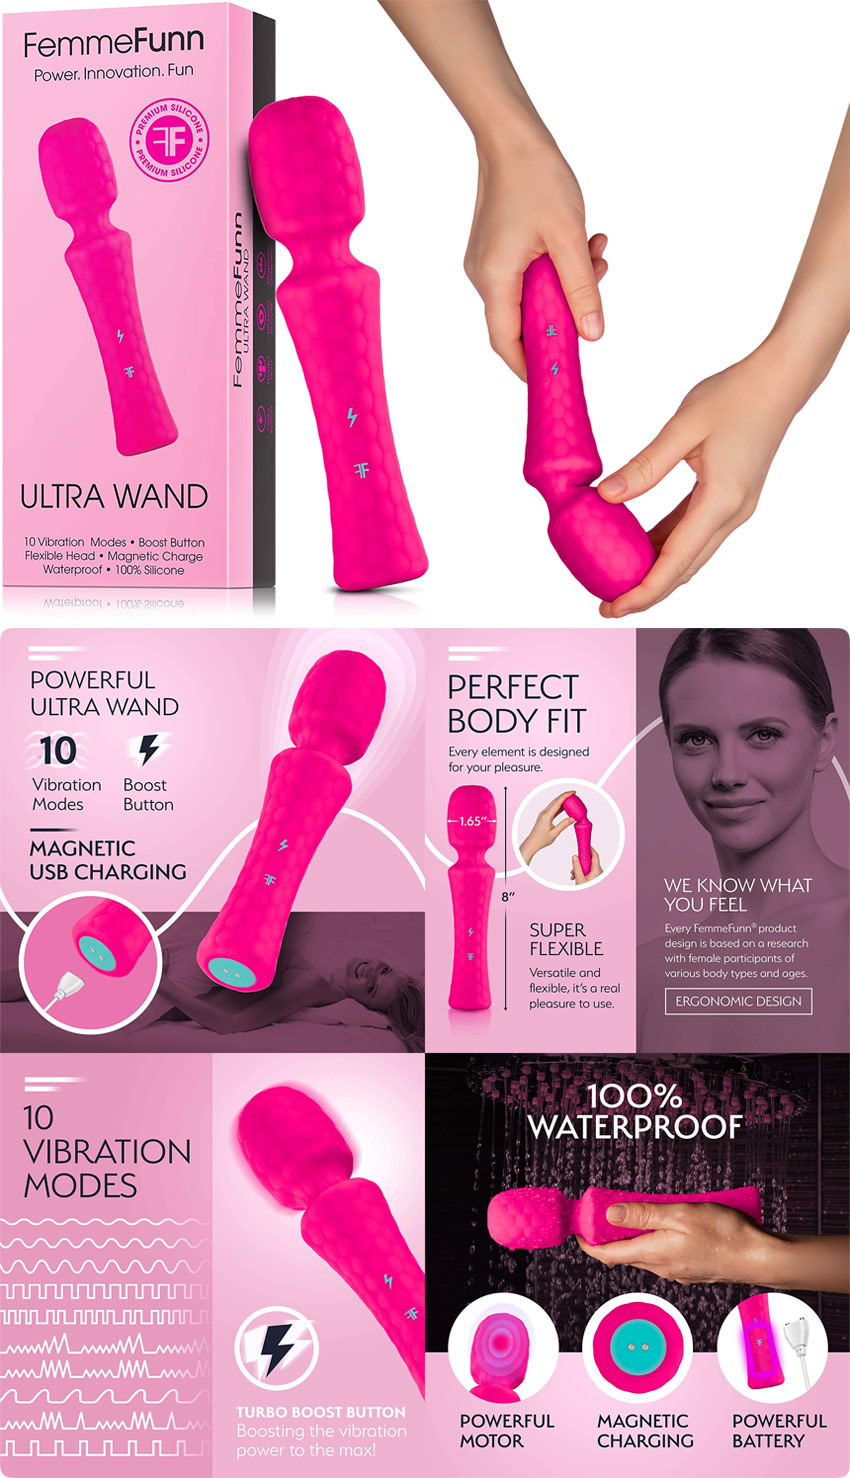 FemmeFunn Ultra Wand ultra powerful wand vibrator